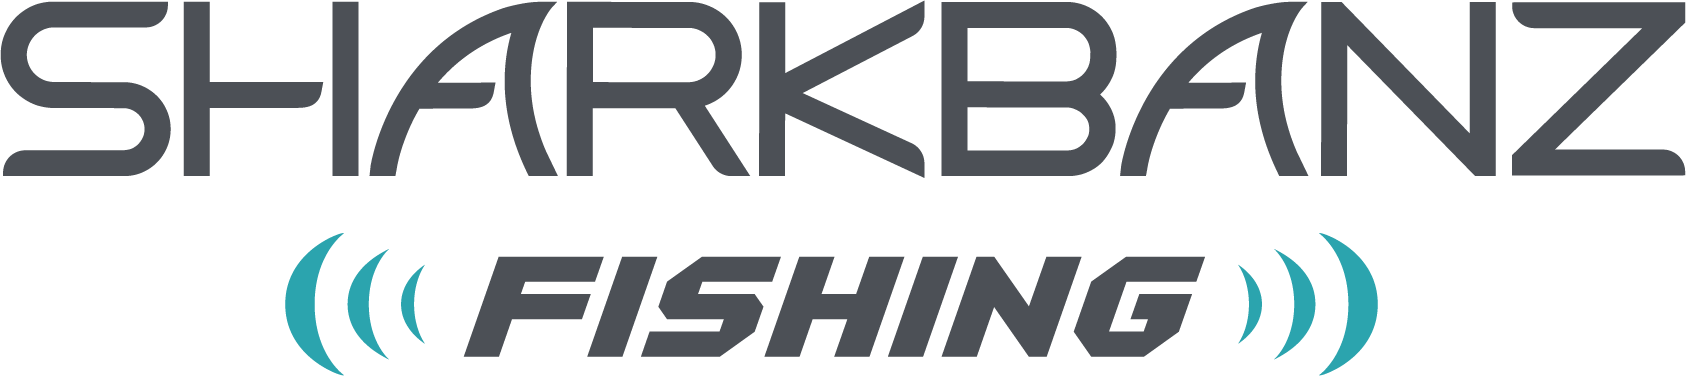 Sharkbanz Fishing Logo